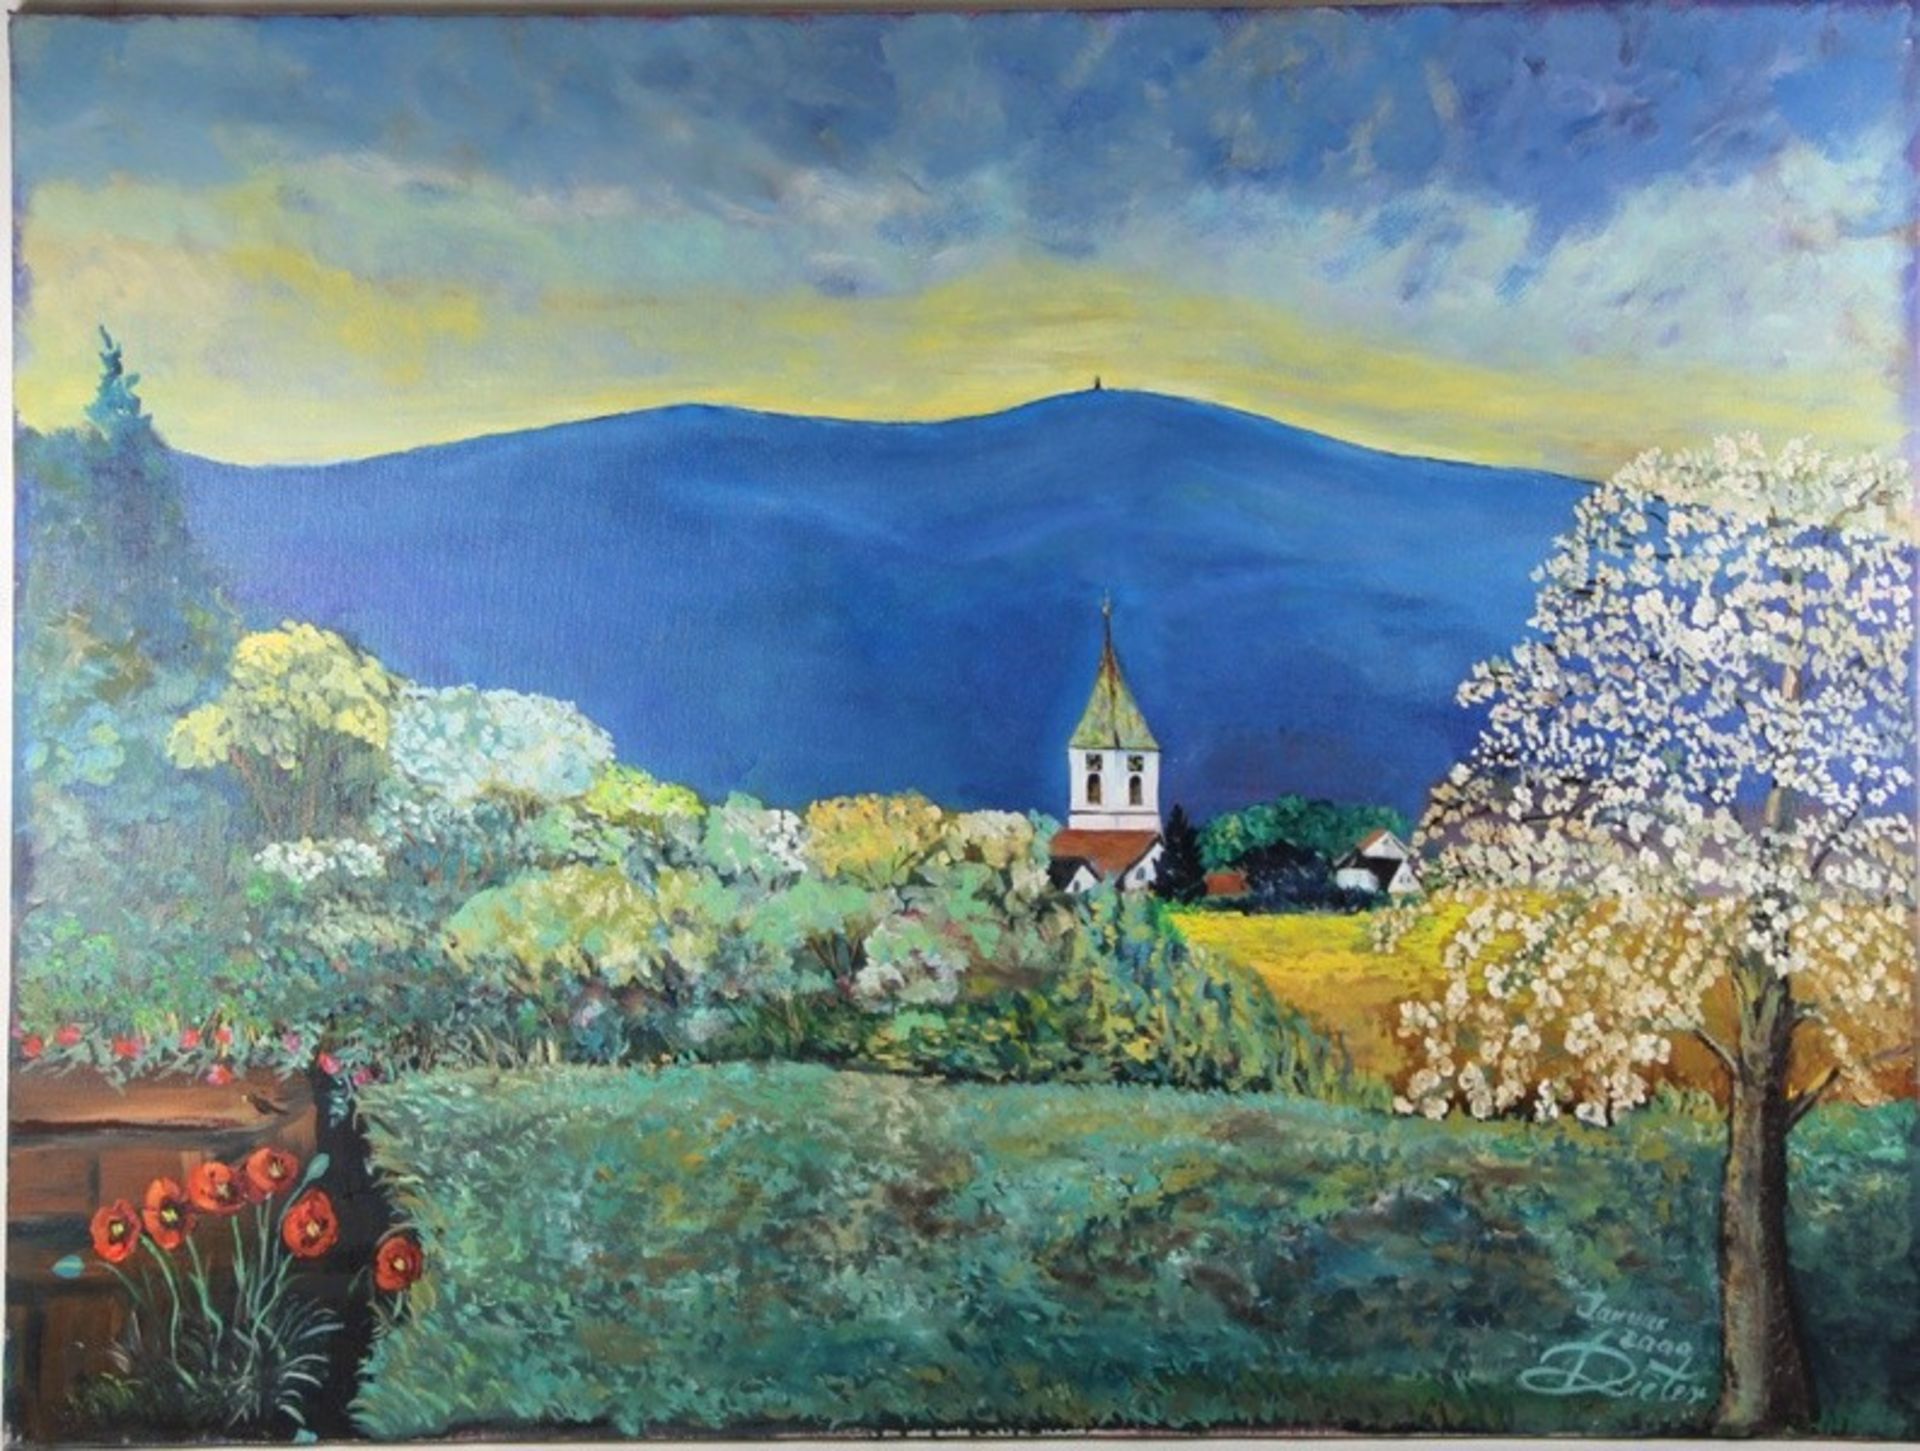 Unbekannter Künstler2007, großformatige Frühlingslandschaft, Blick auf Kirchturm u. Gebäude einer